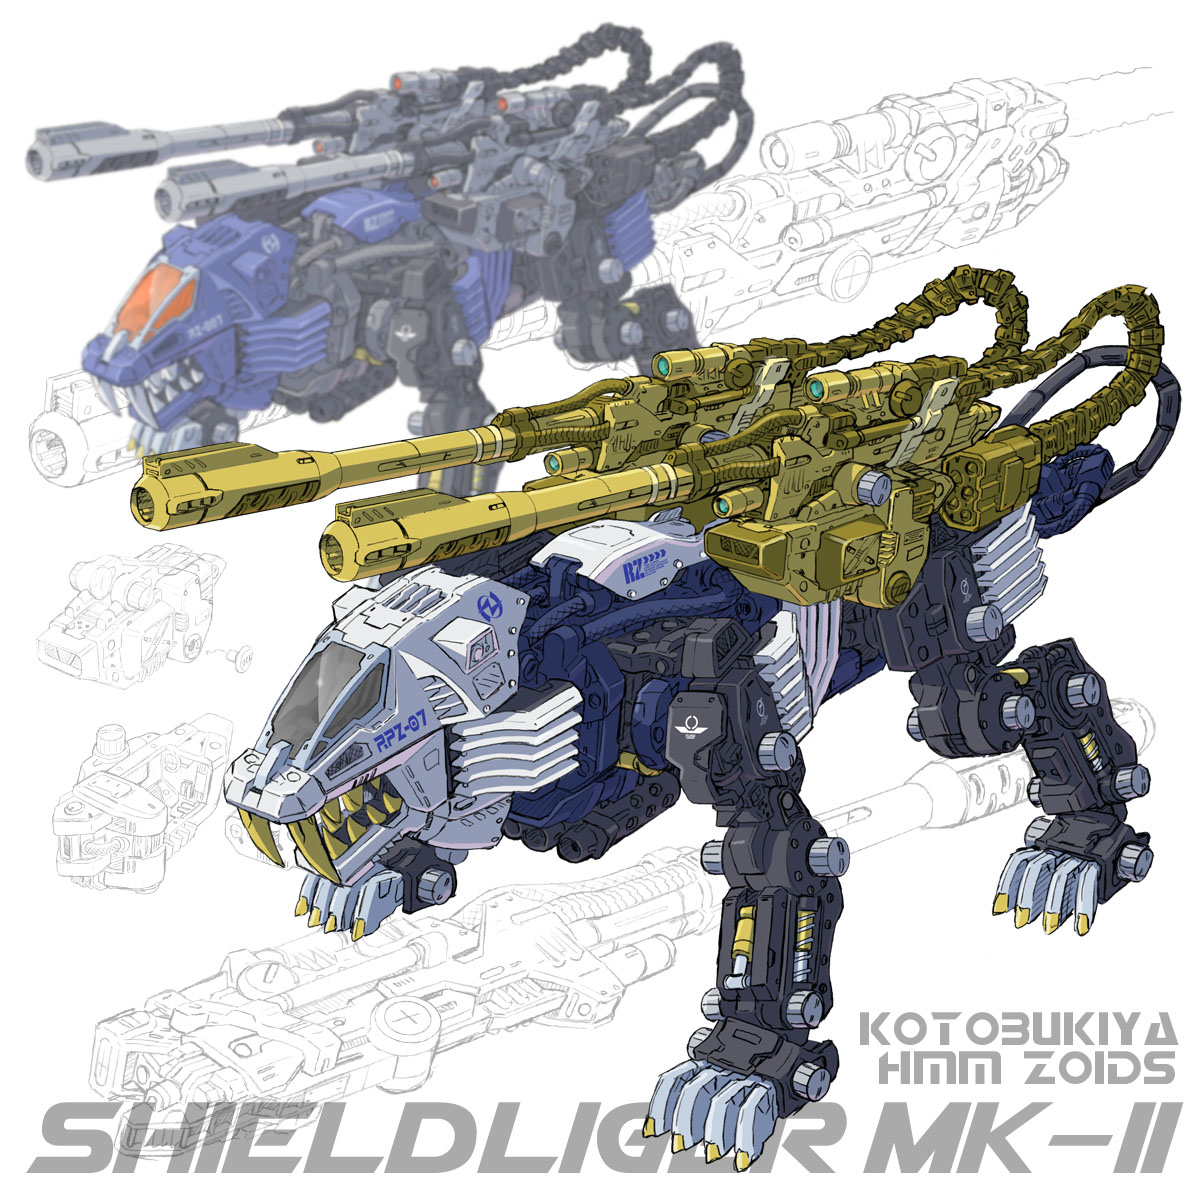 shield liger and shield liger mk-ii (zoids) drawn by 